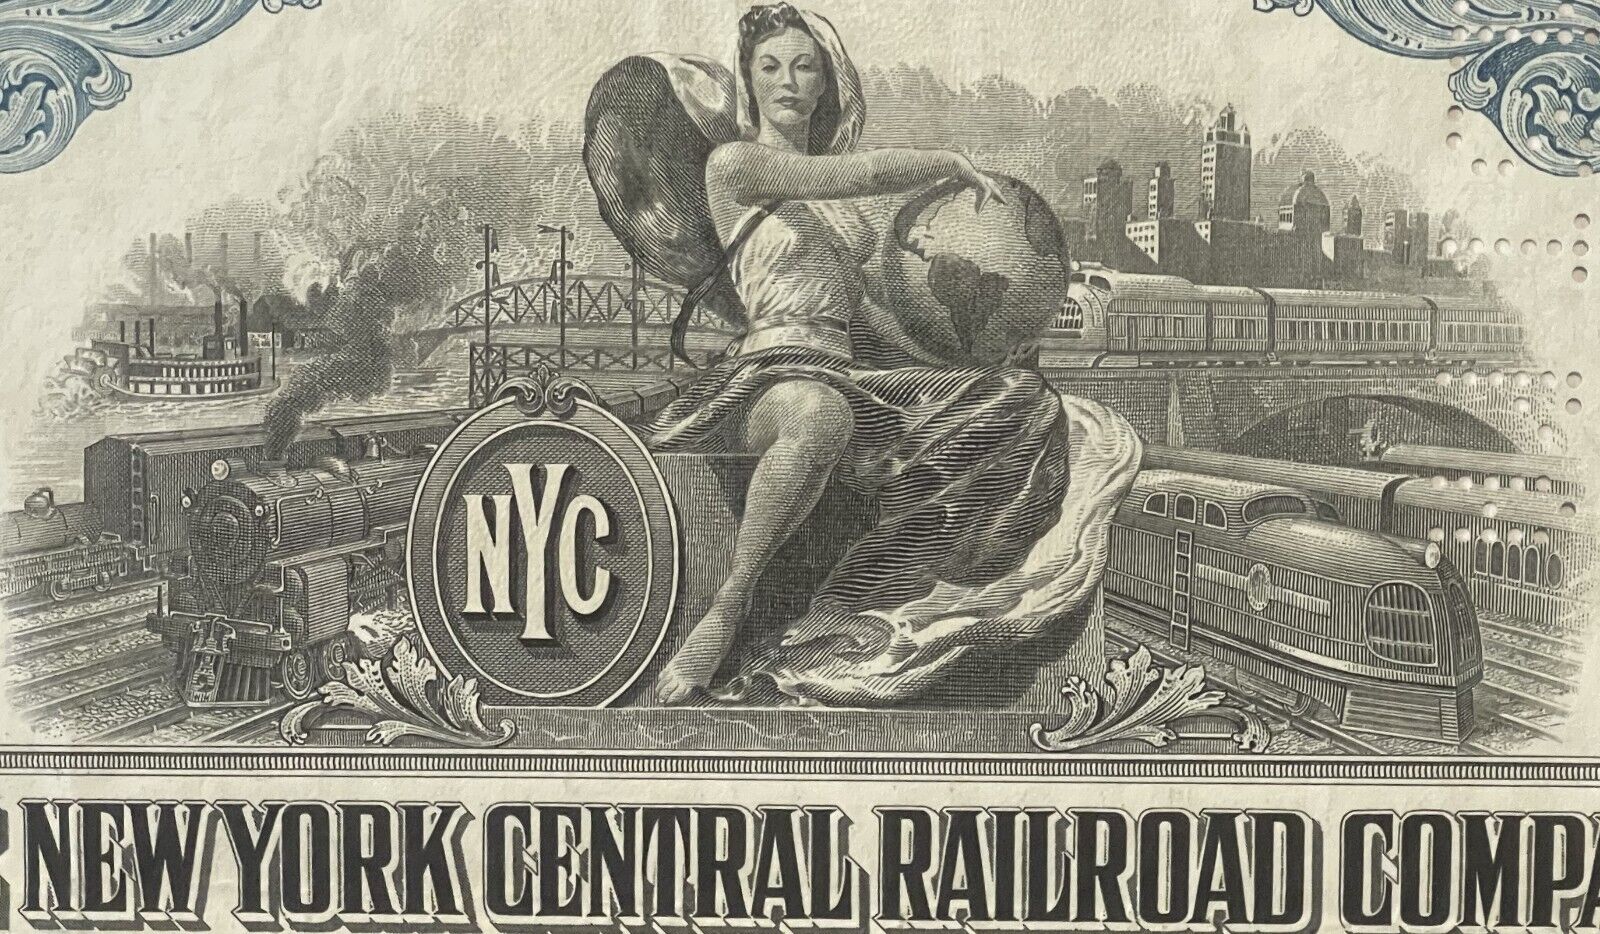 Rare Antique Vintage 1955 New York Central Railroad Co. Gold Bond Certificate